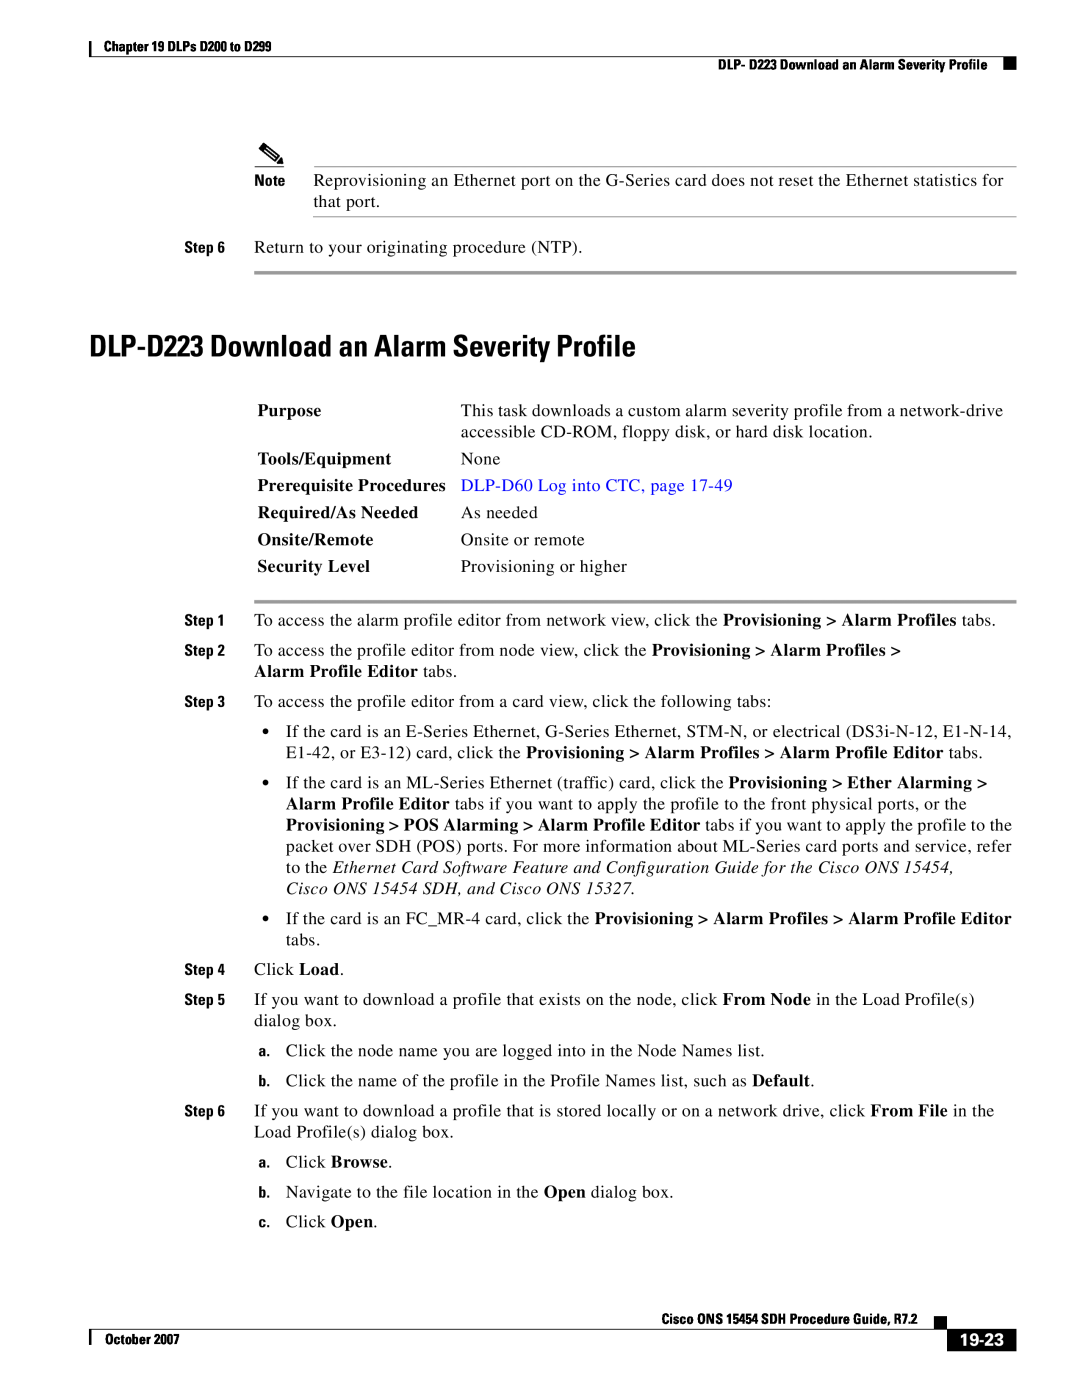 Cisco Systems D200 manual DLP-D223 Download an Alarm Severity Profile, 19-23, DLP-D60 Log into CTC, page, Click Load 